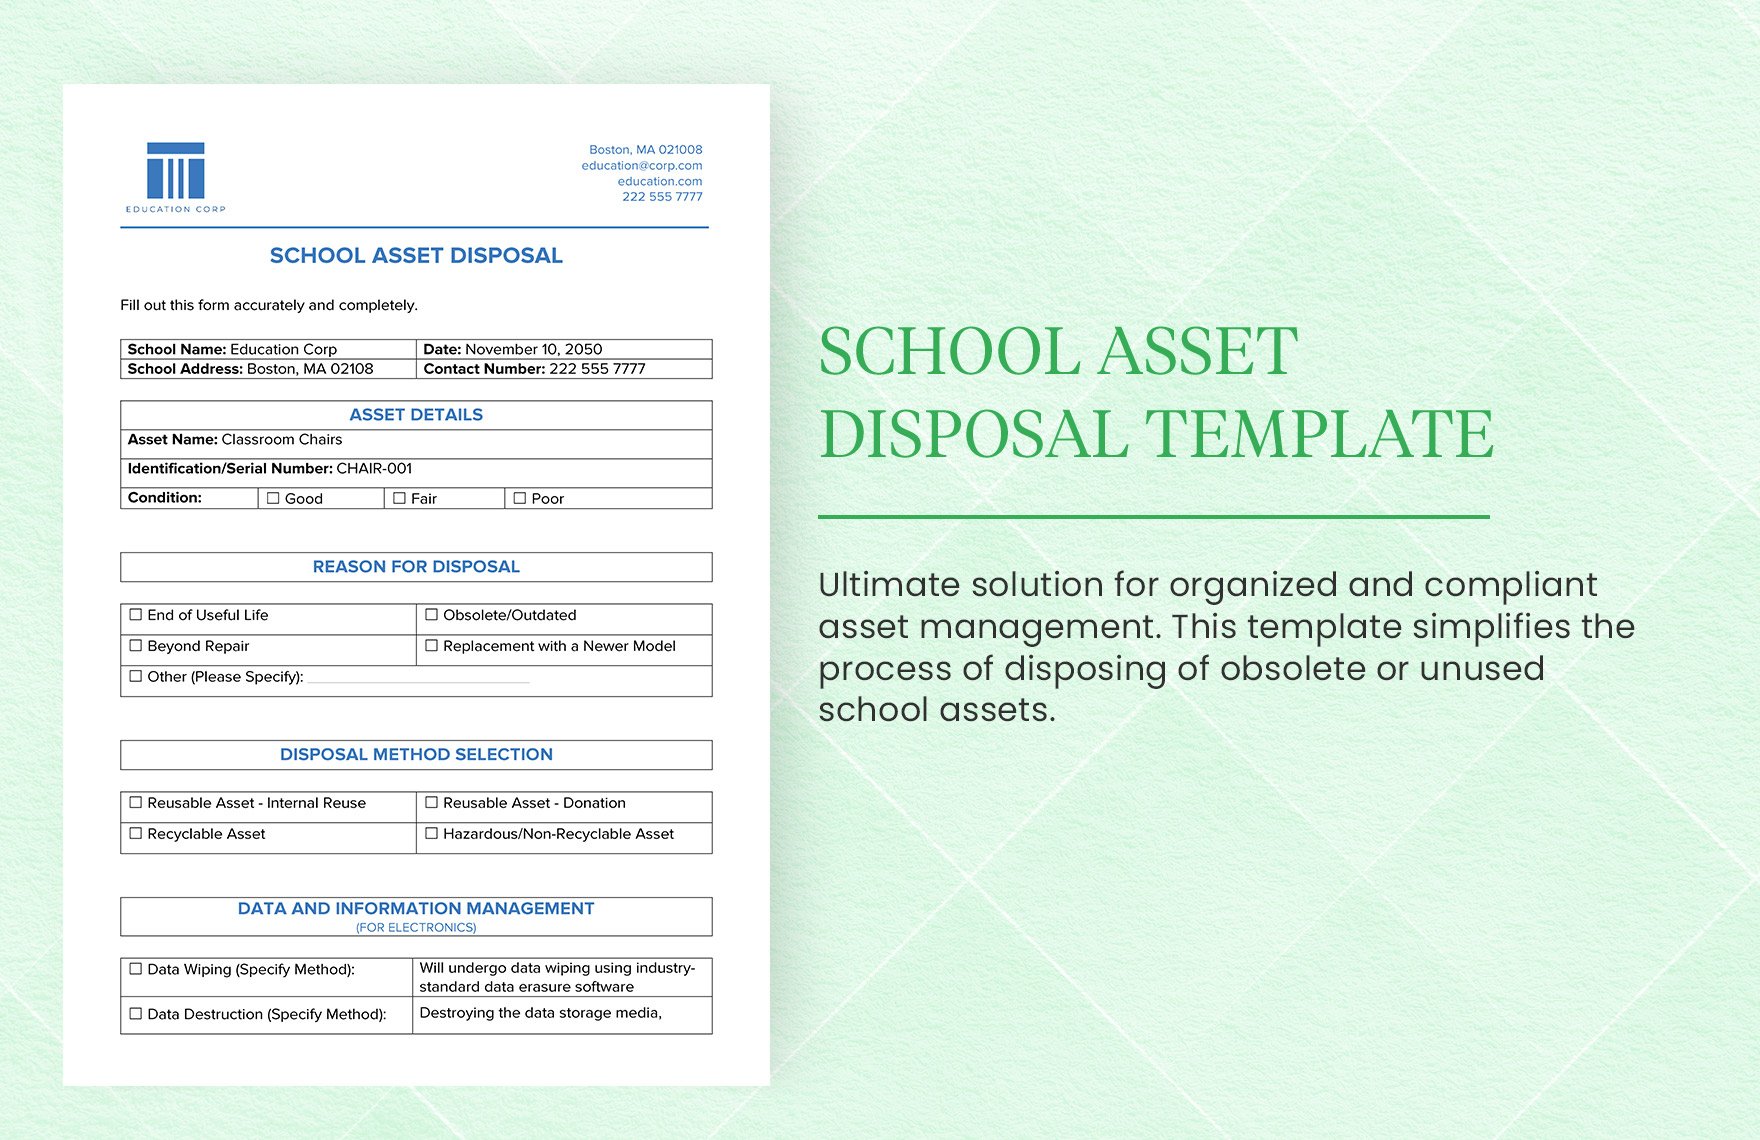 School Asset Disposal Template in Word, Google Docs, PDF